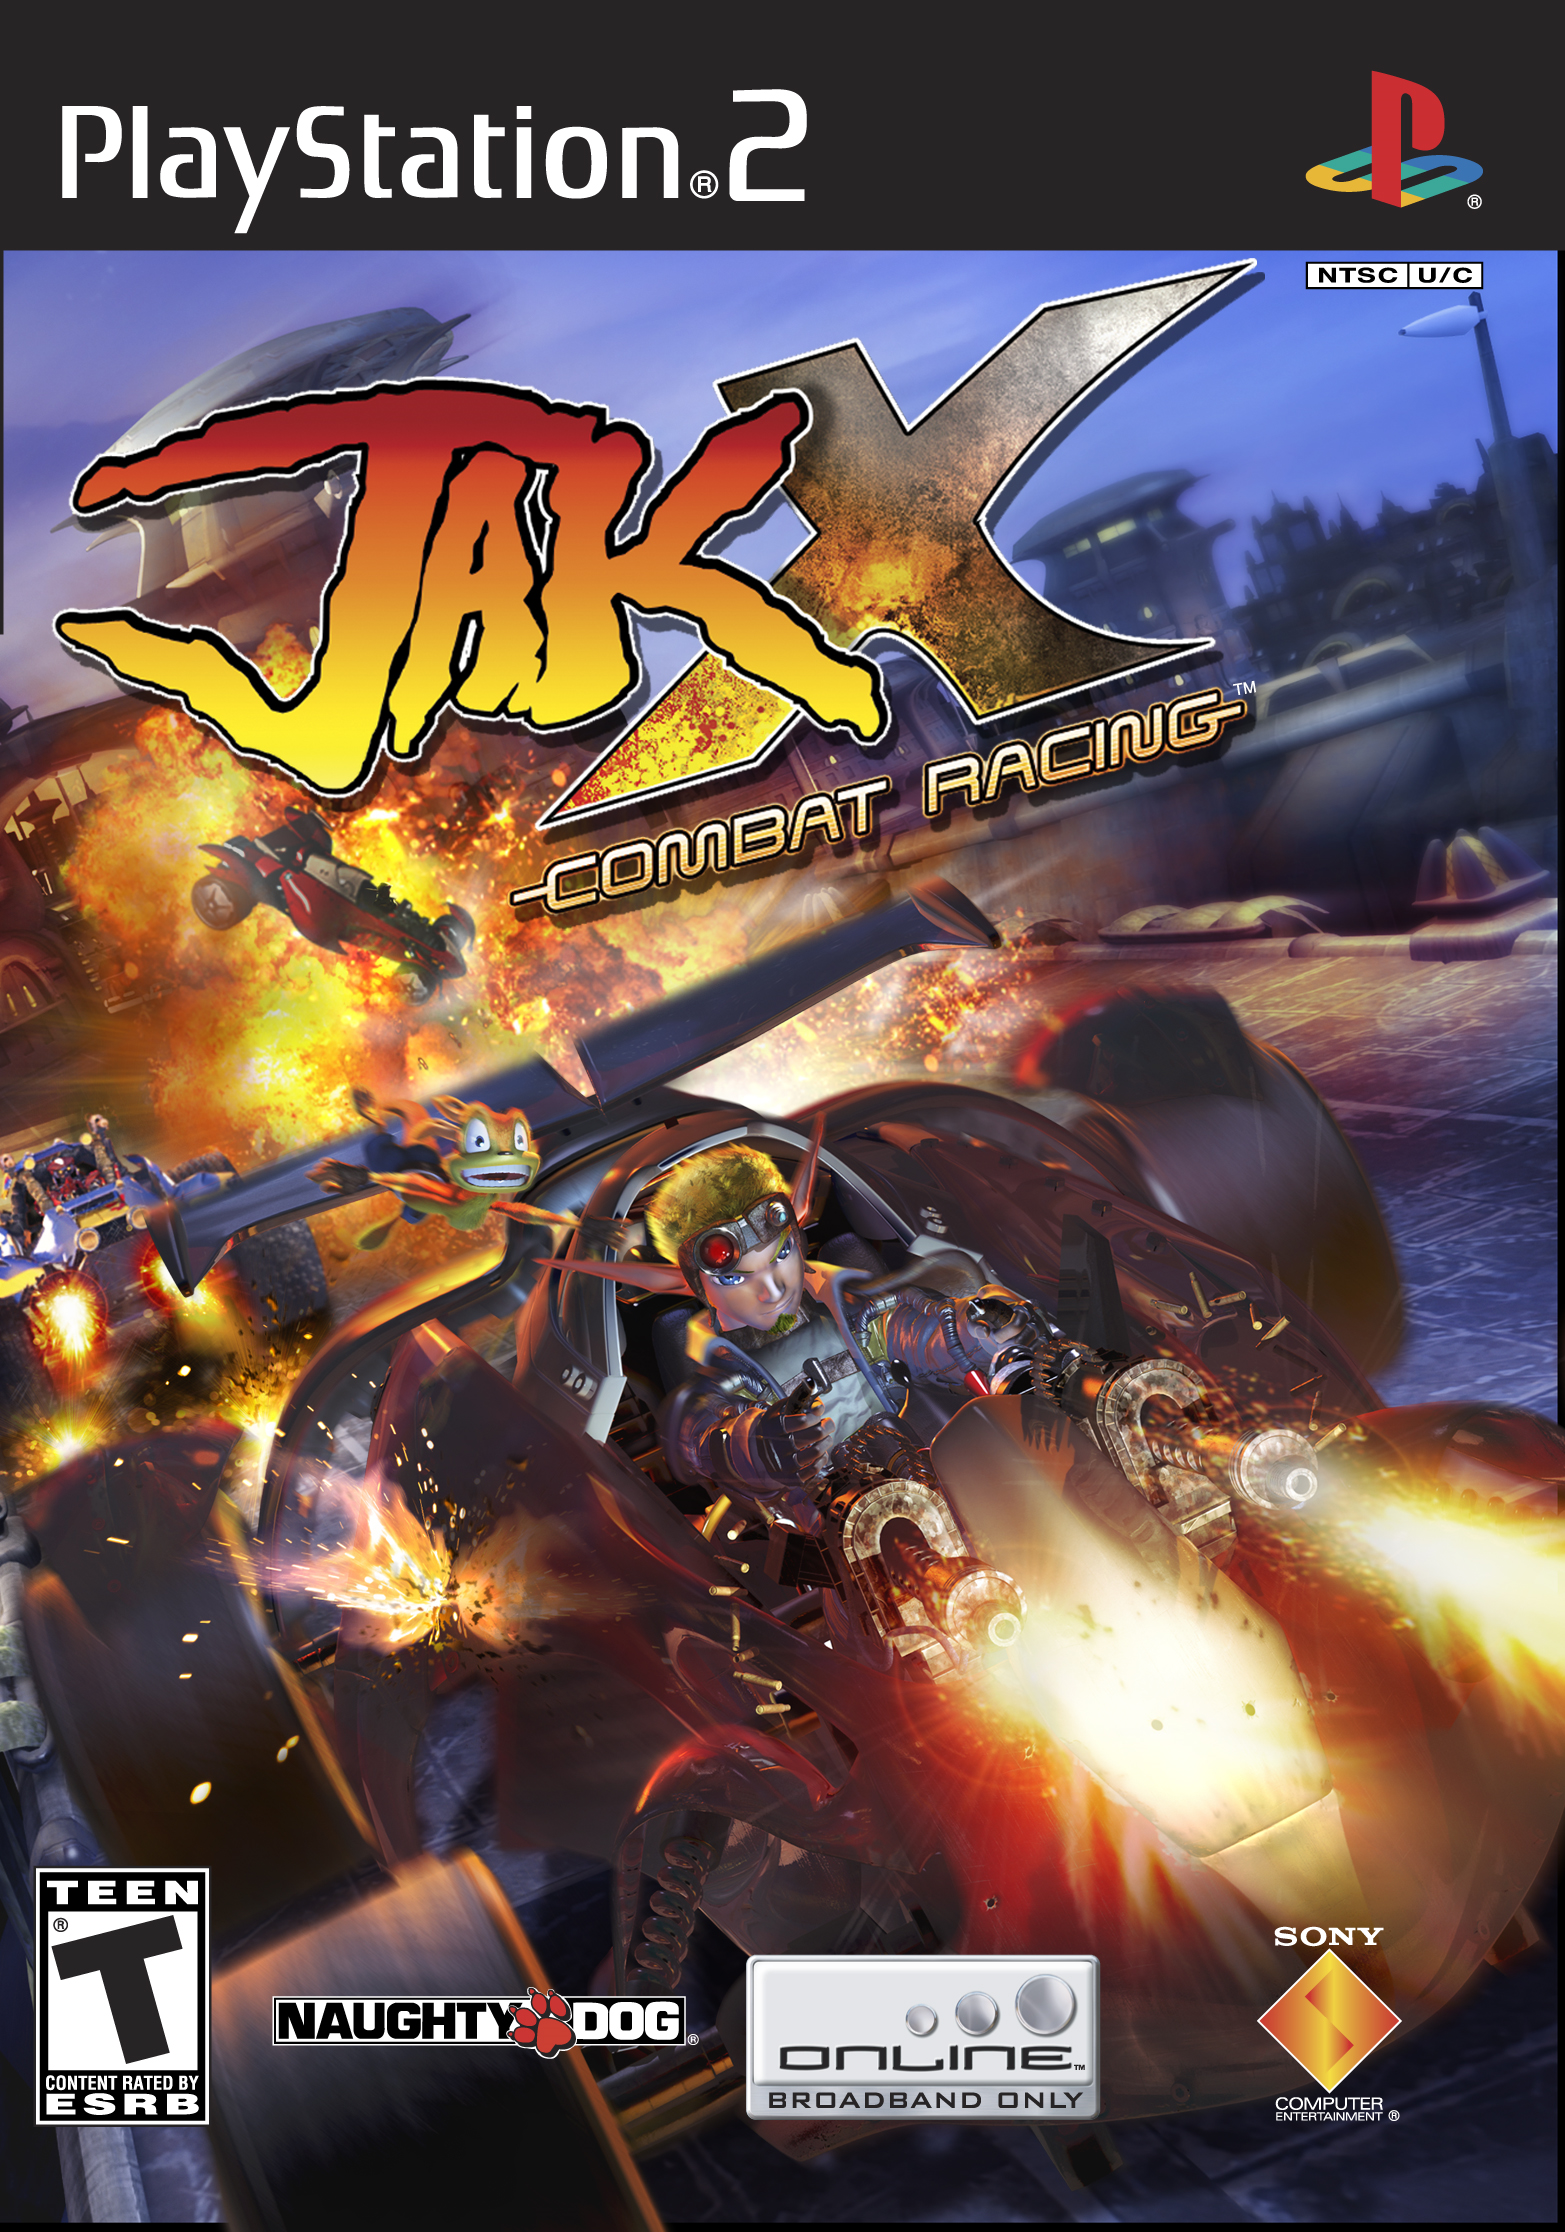 Гонки на пс 2. Jak x Combat Racing ps2. Jak x Combat Racing ps2 Cover. Jak & Daxter плейстейшен 2. Гонки на плейстейшен 2.